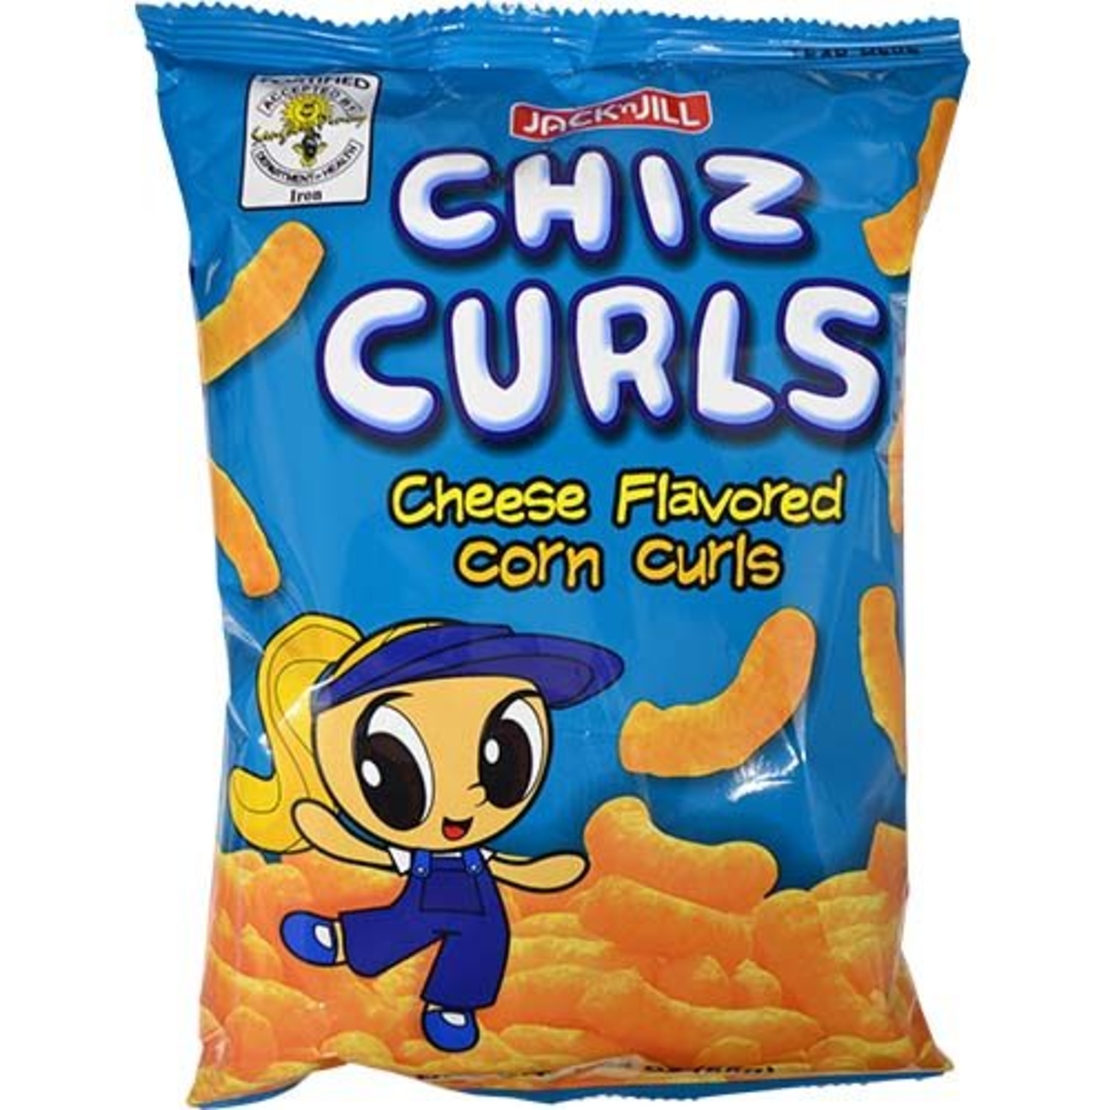 Chiz Curls - Cheese Flavored Corn Curls 55g